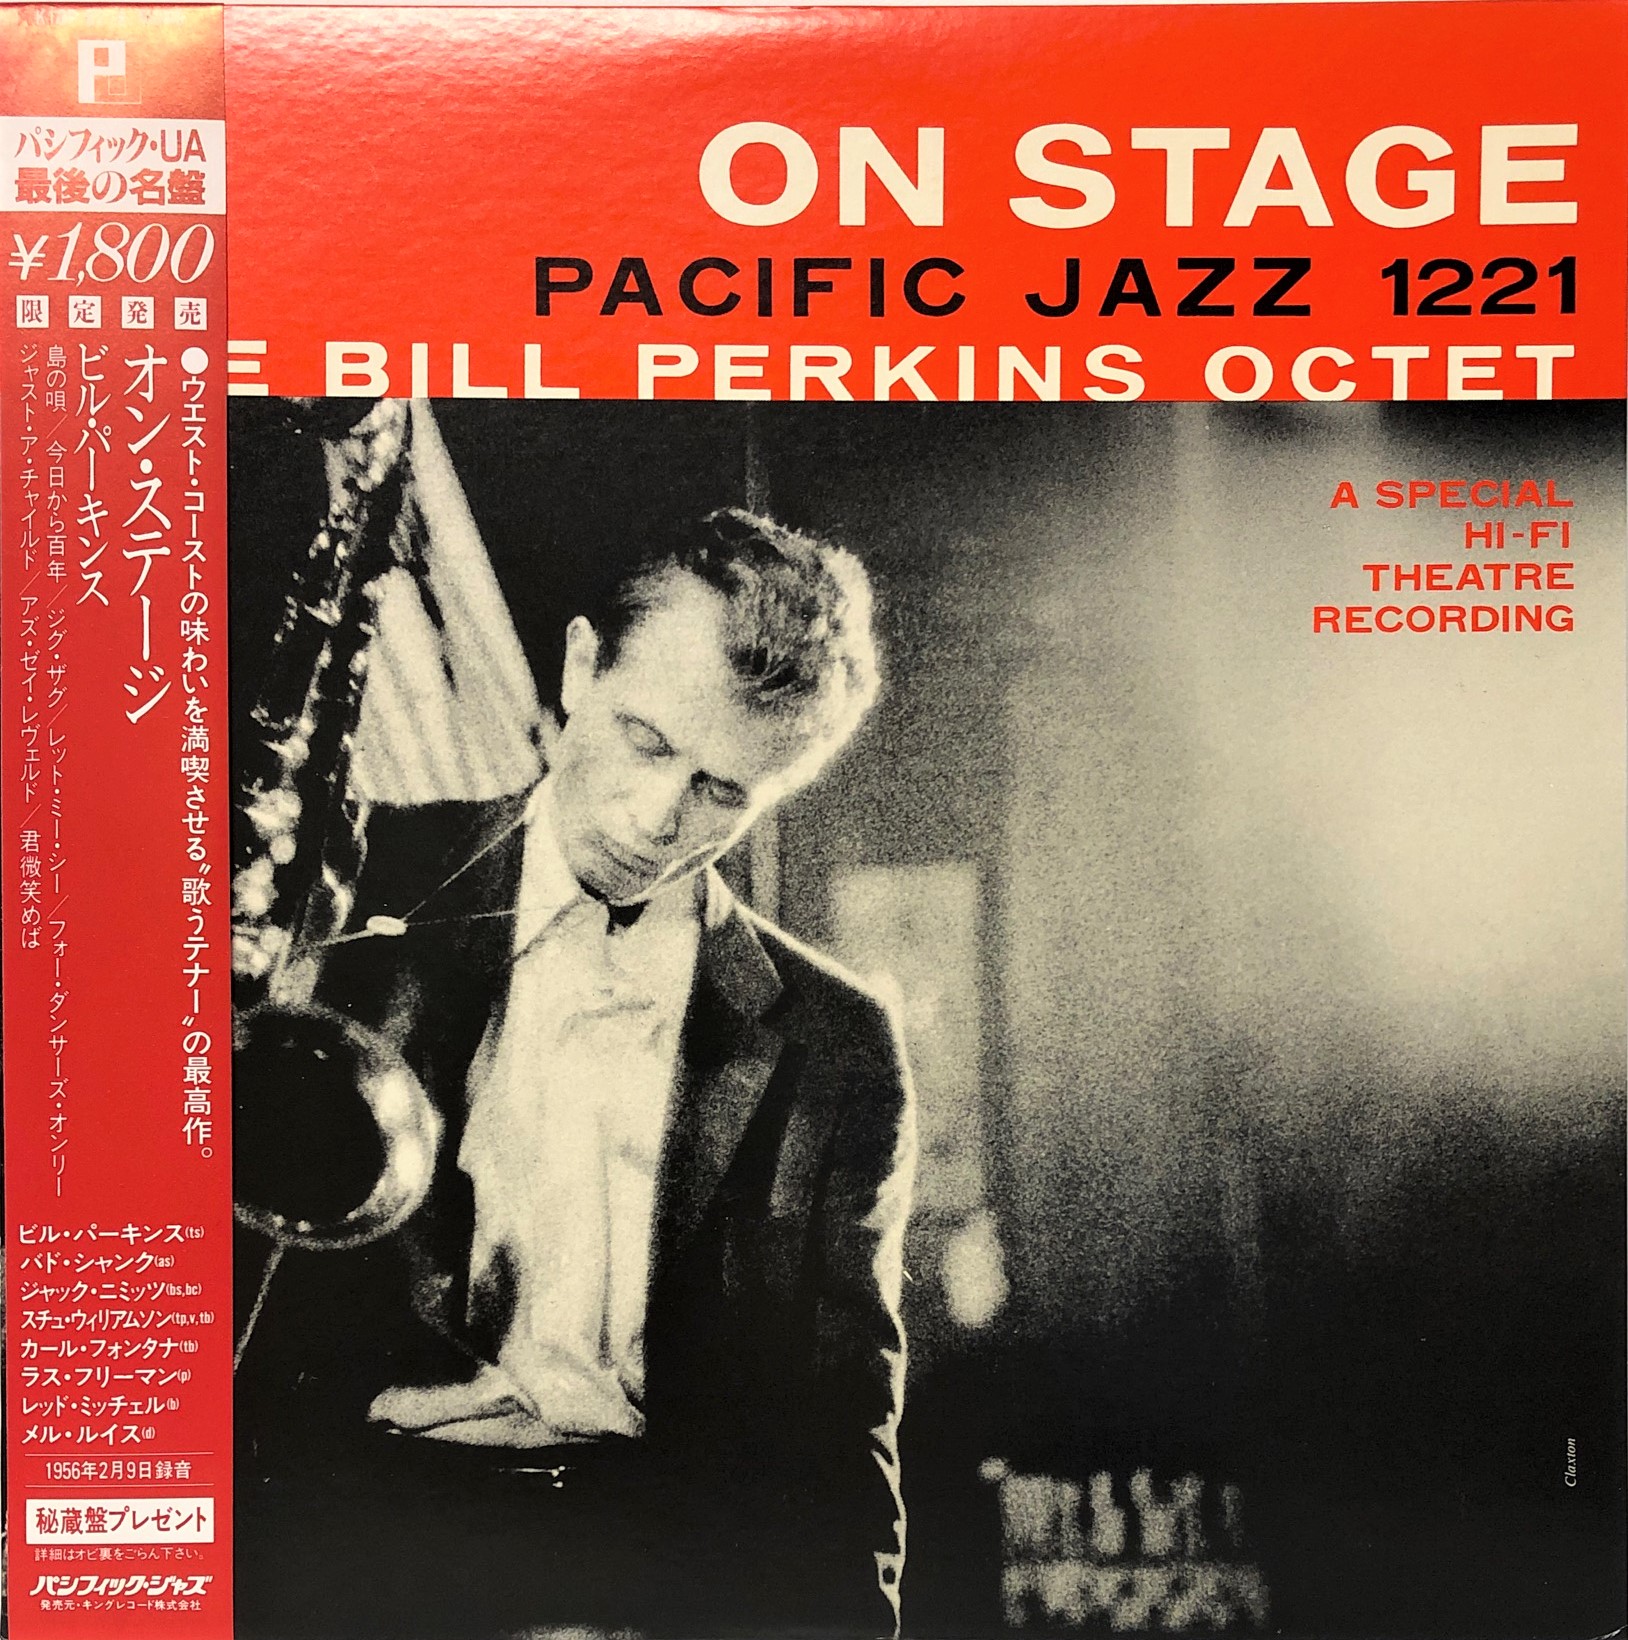 Bill Perkins Octet On Stage 中古レコード通販 買取のアカル レコーズ